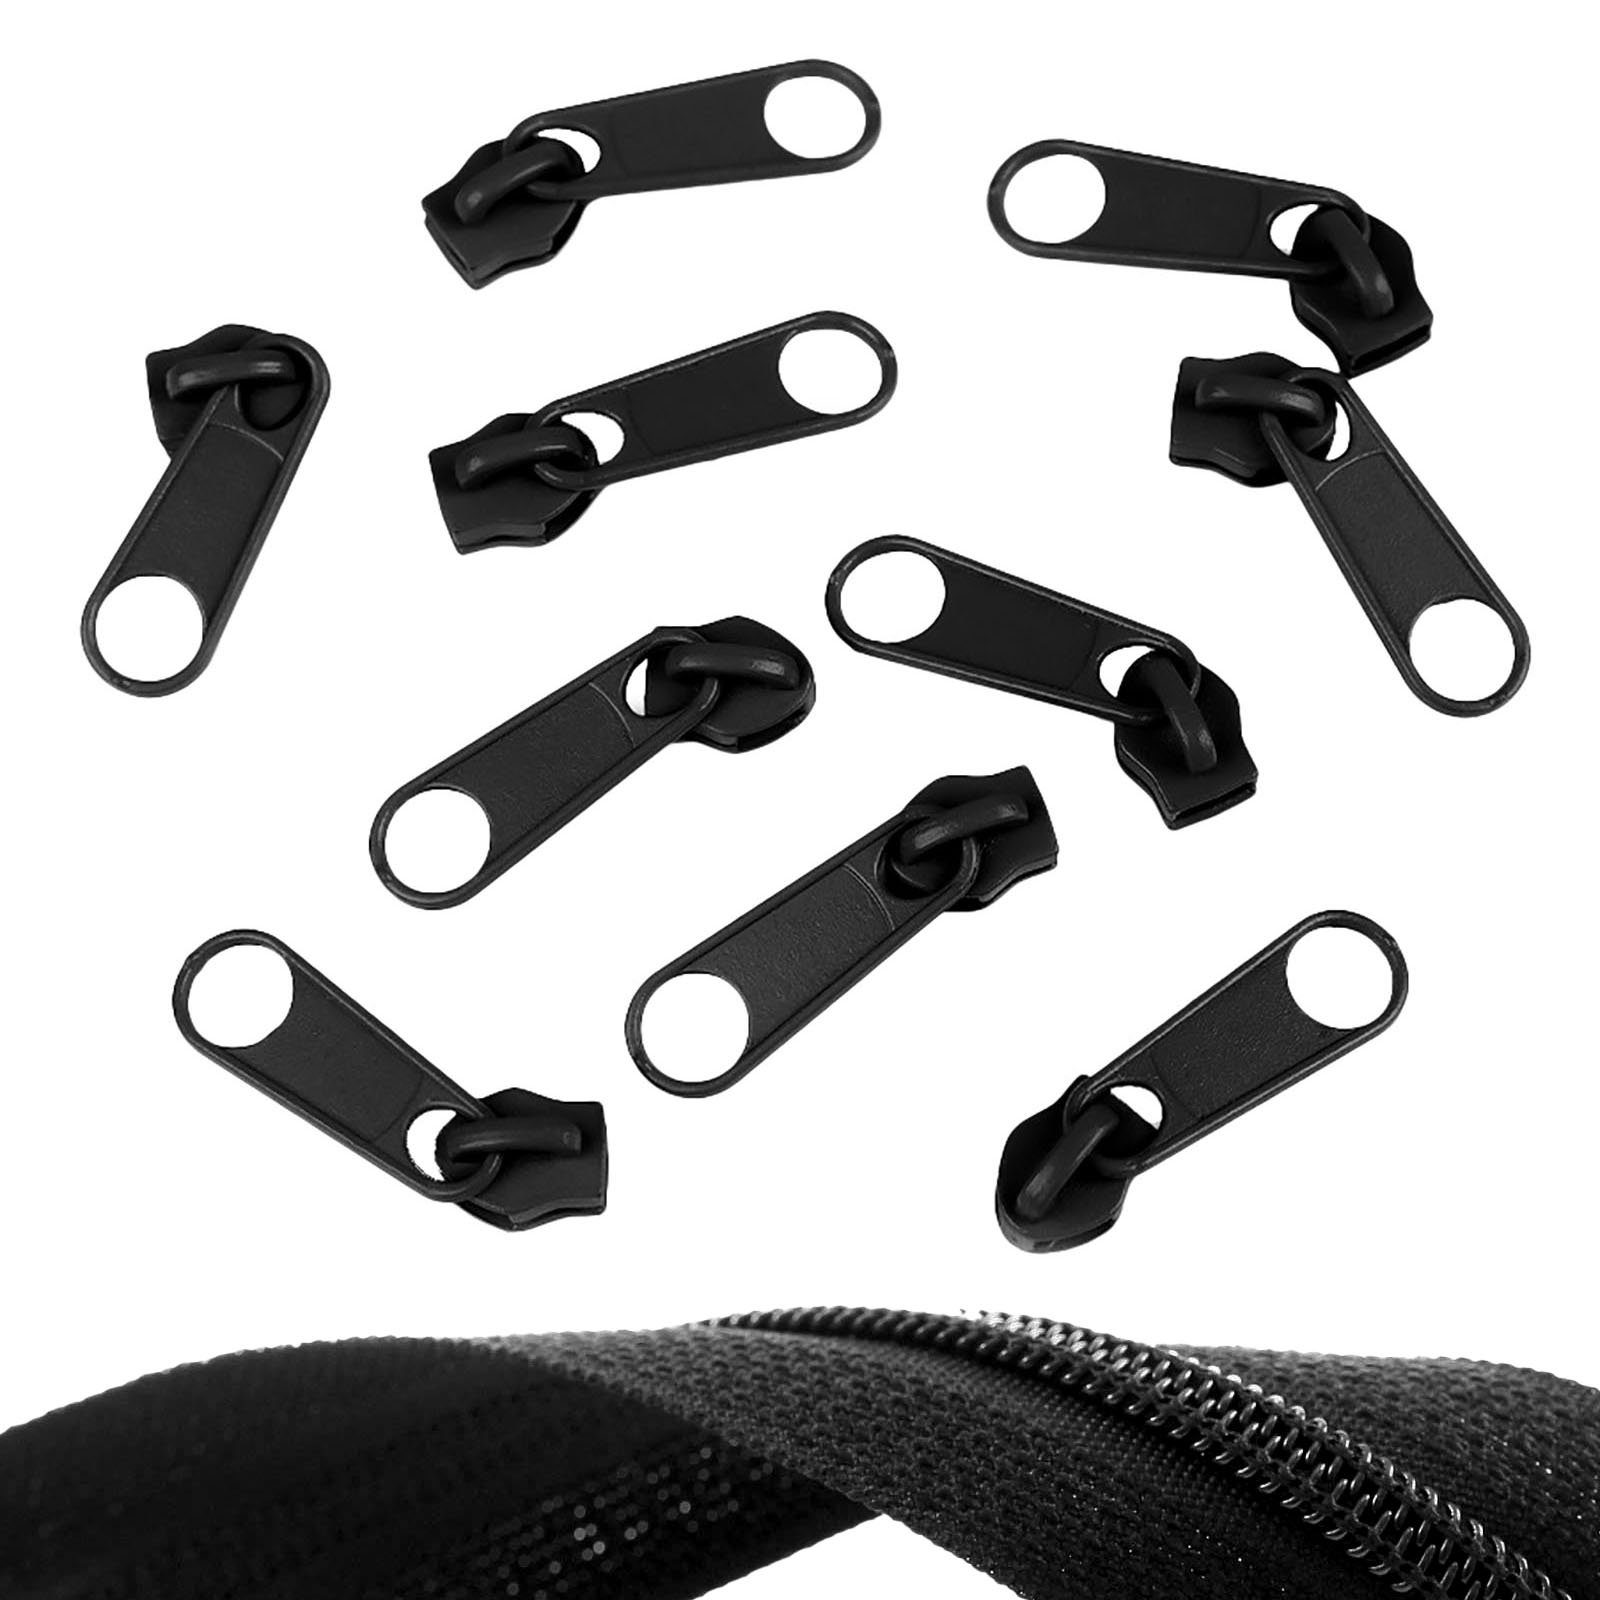 maDDma Reißverschluss 10 Reißverschluss Zipper für Endlosreißverschluss, 5mm, schwarz